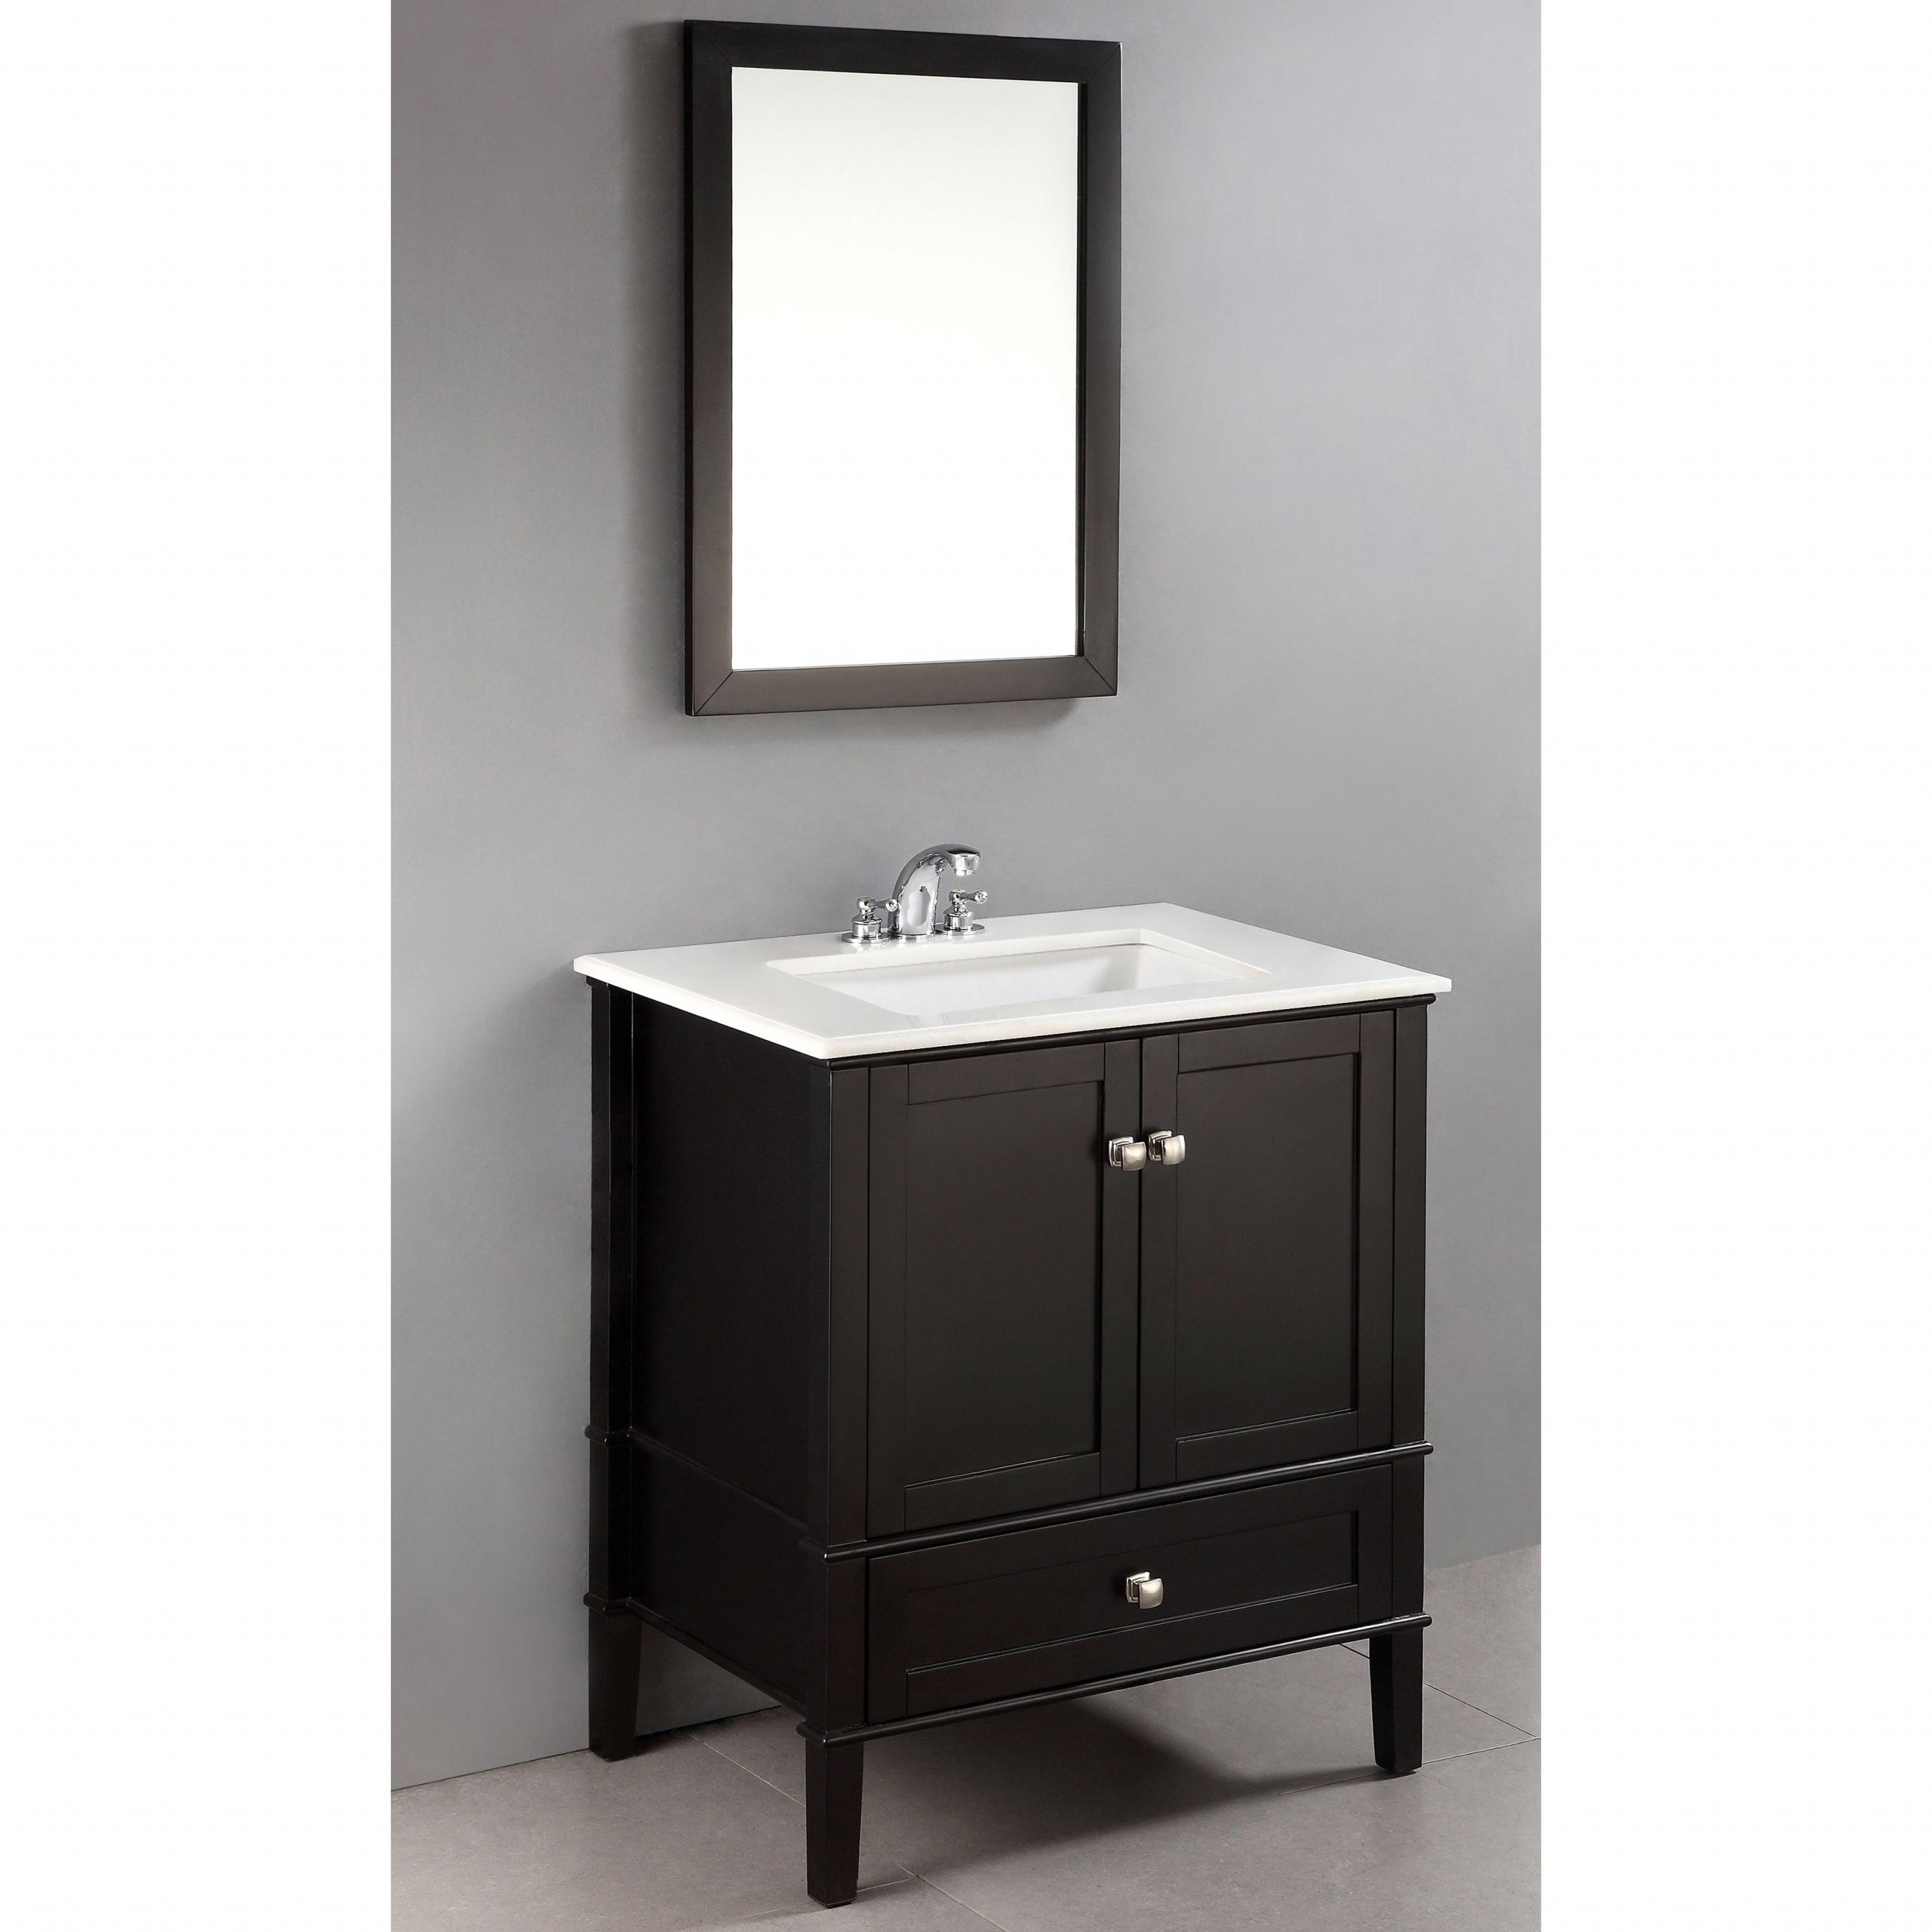 30 Bathroom Vanity With Drawers
 Windham Black 30 inch Bath Vanity with 2 Doors Bottom